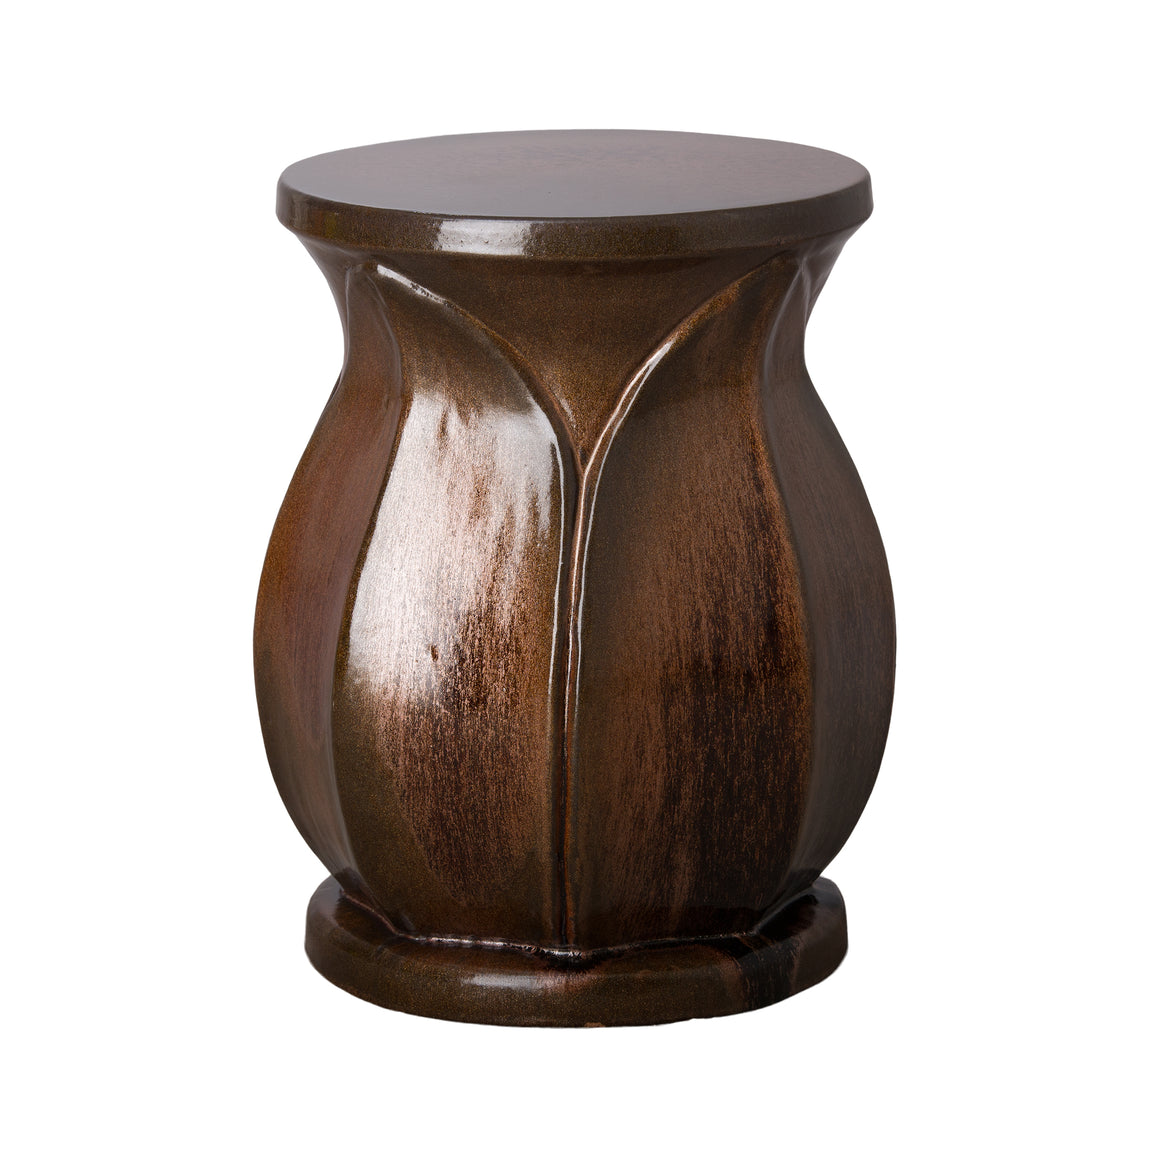 Lotus Ceramic Garden Stool/Table with a Mocha Pearl Glaze